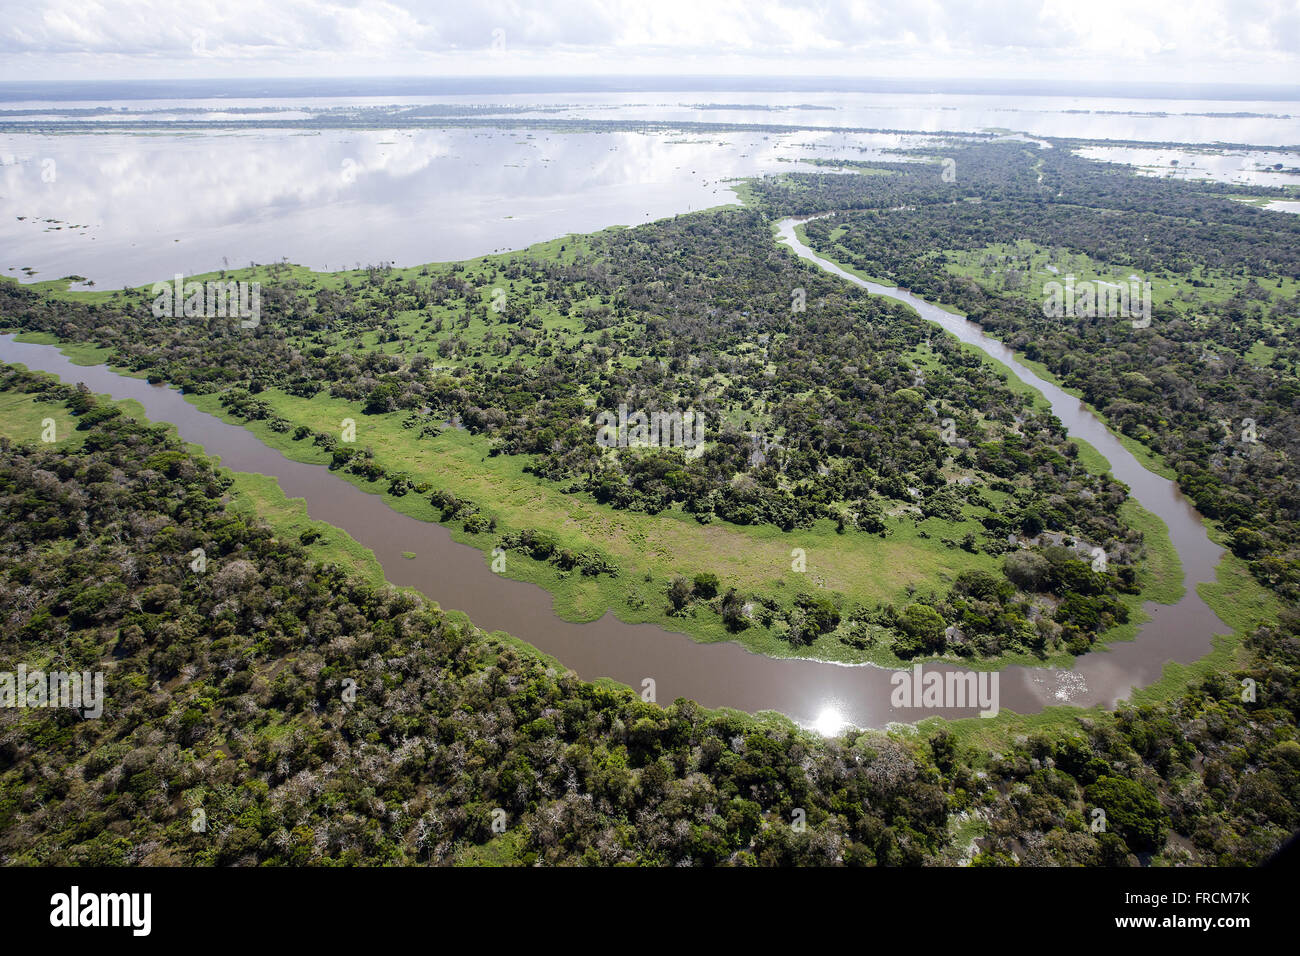 Vista Aérea de áreas da Floresta amazônica durante un alagadas cheia do Rio Amazonas Banque D'Images